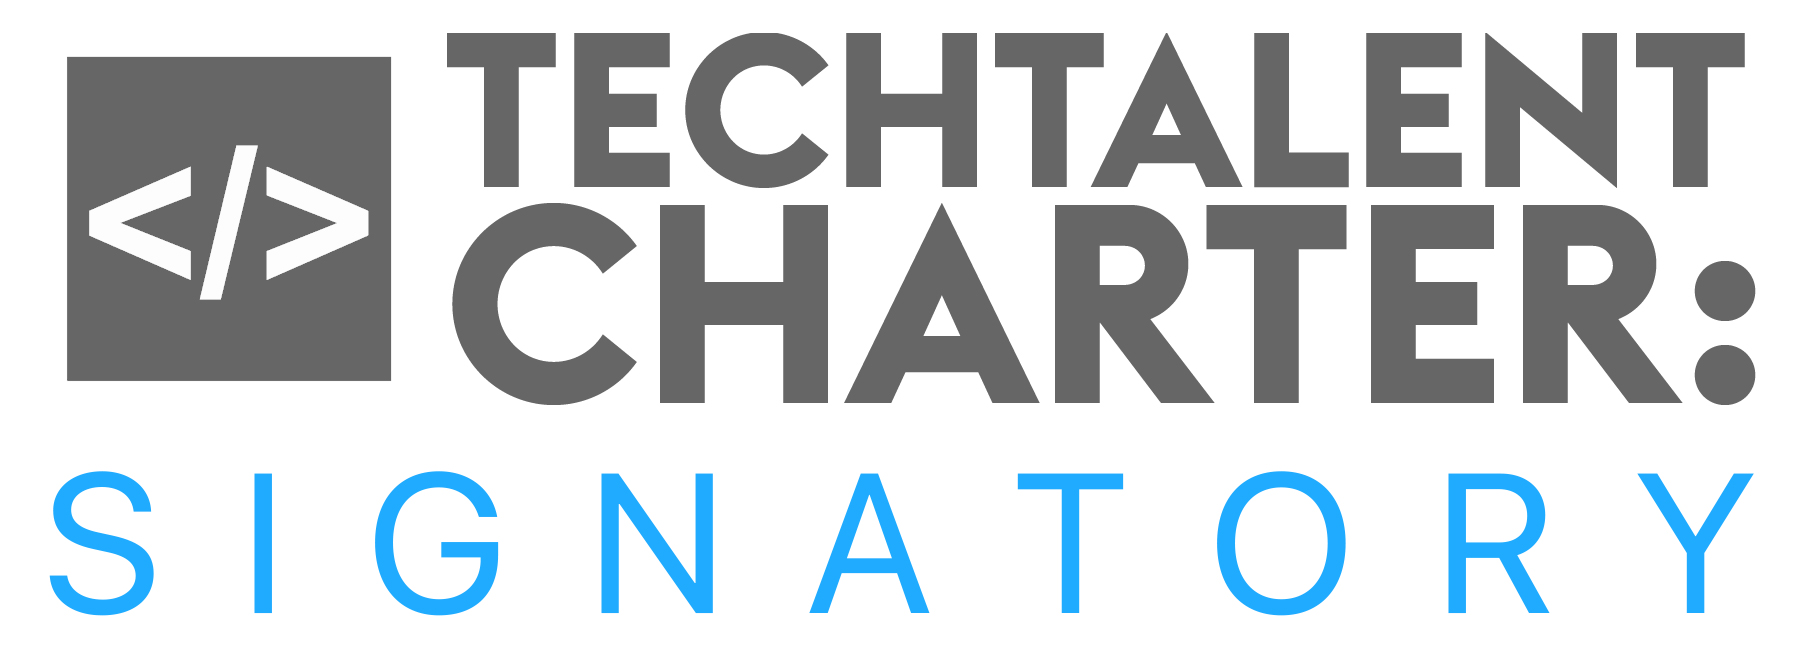 Tech Talent Charter Signatory logo